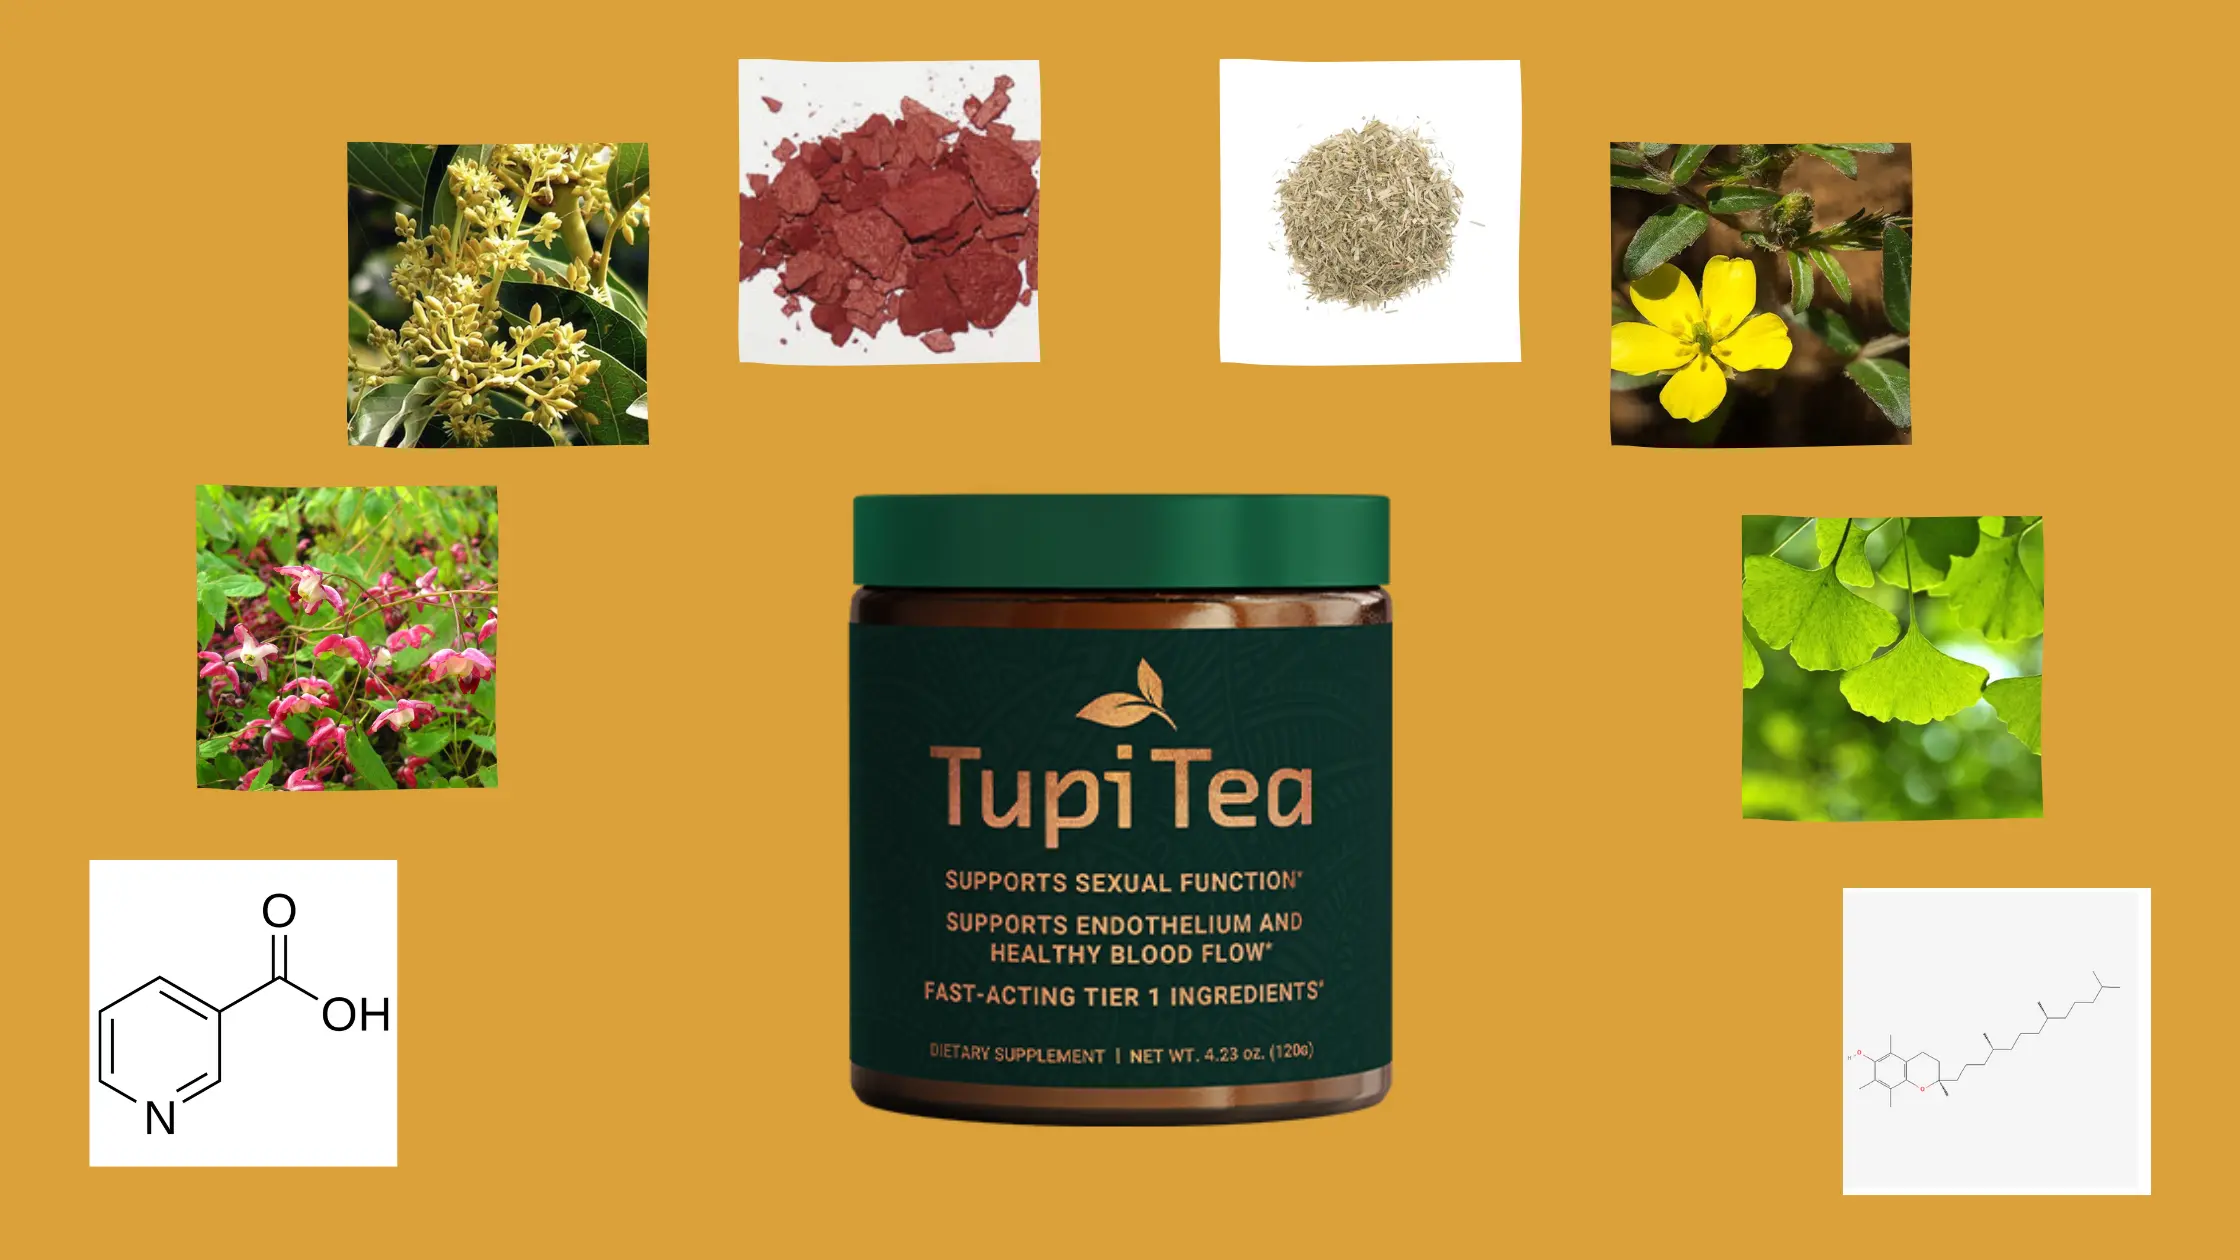 TupiTea Ingredients